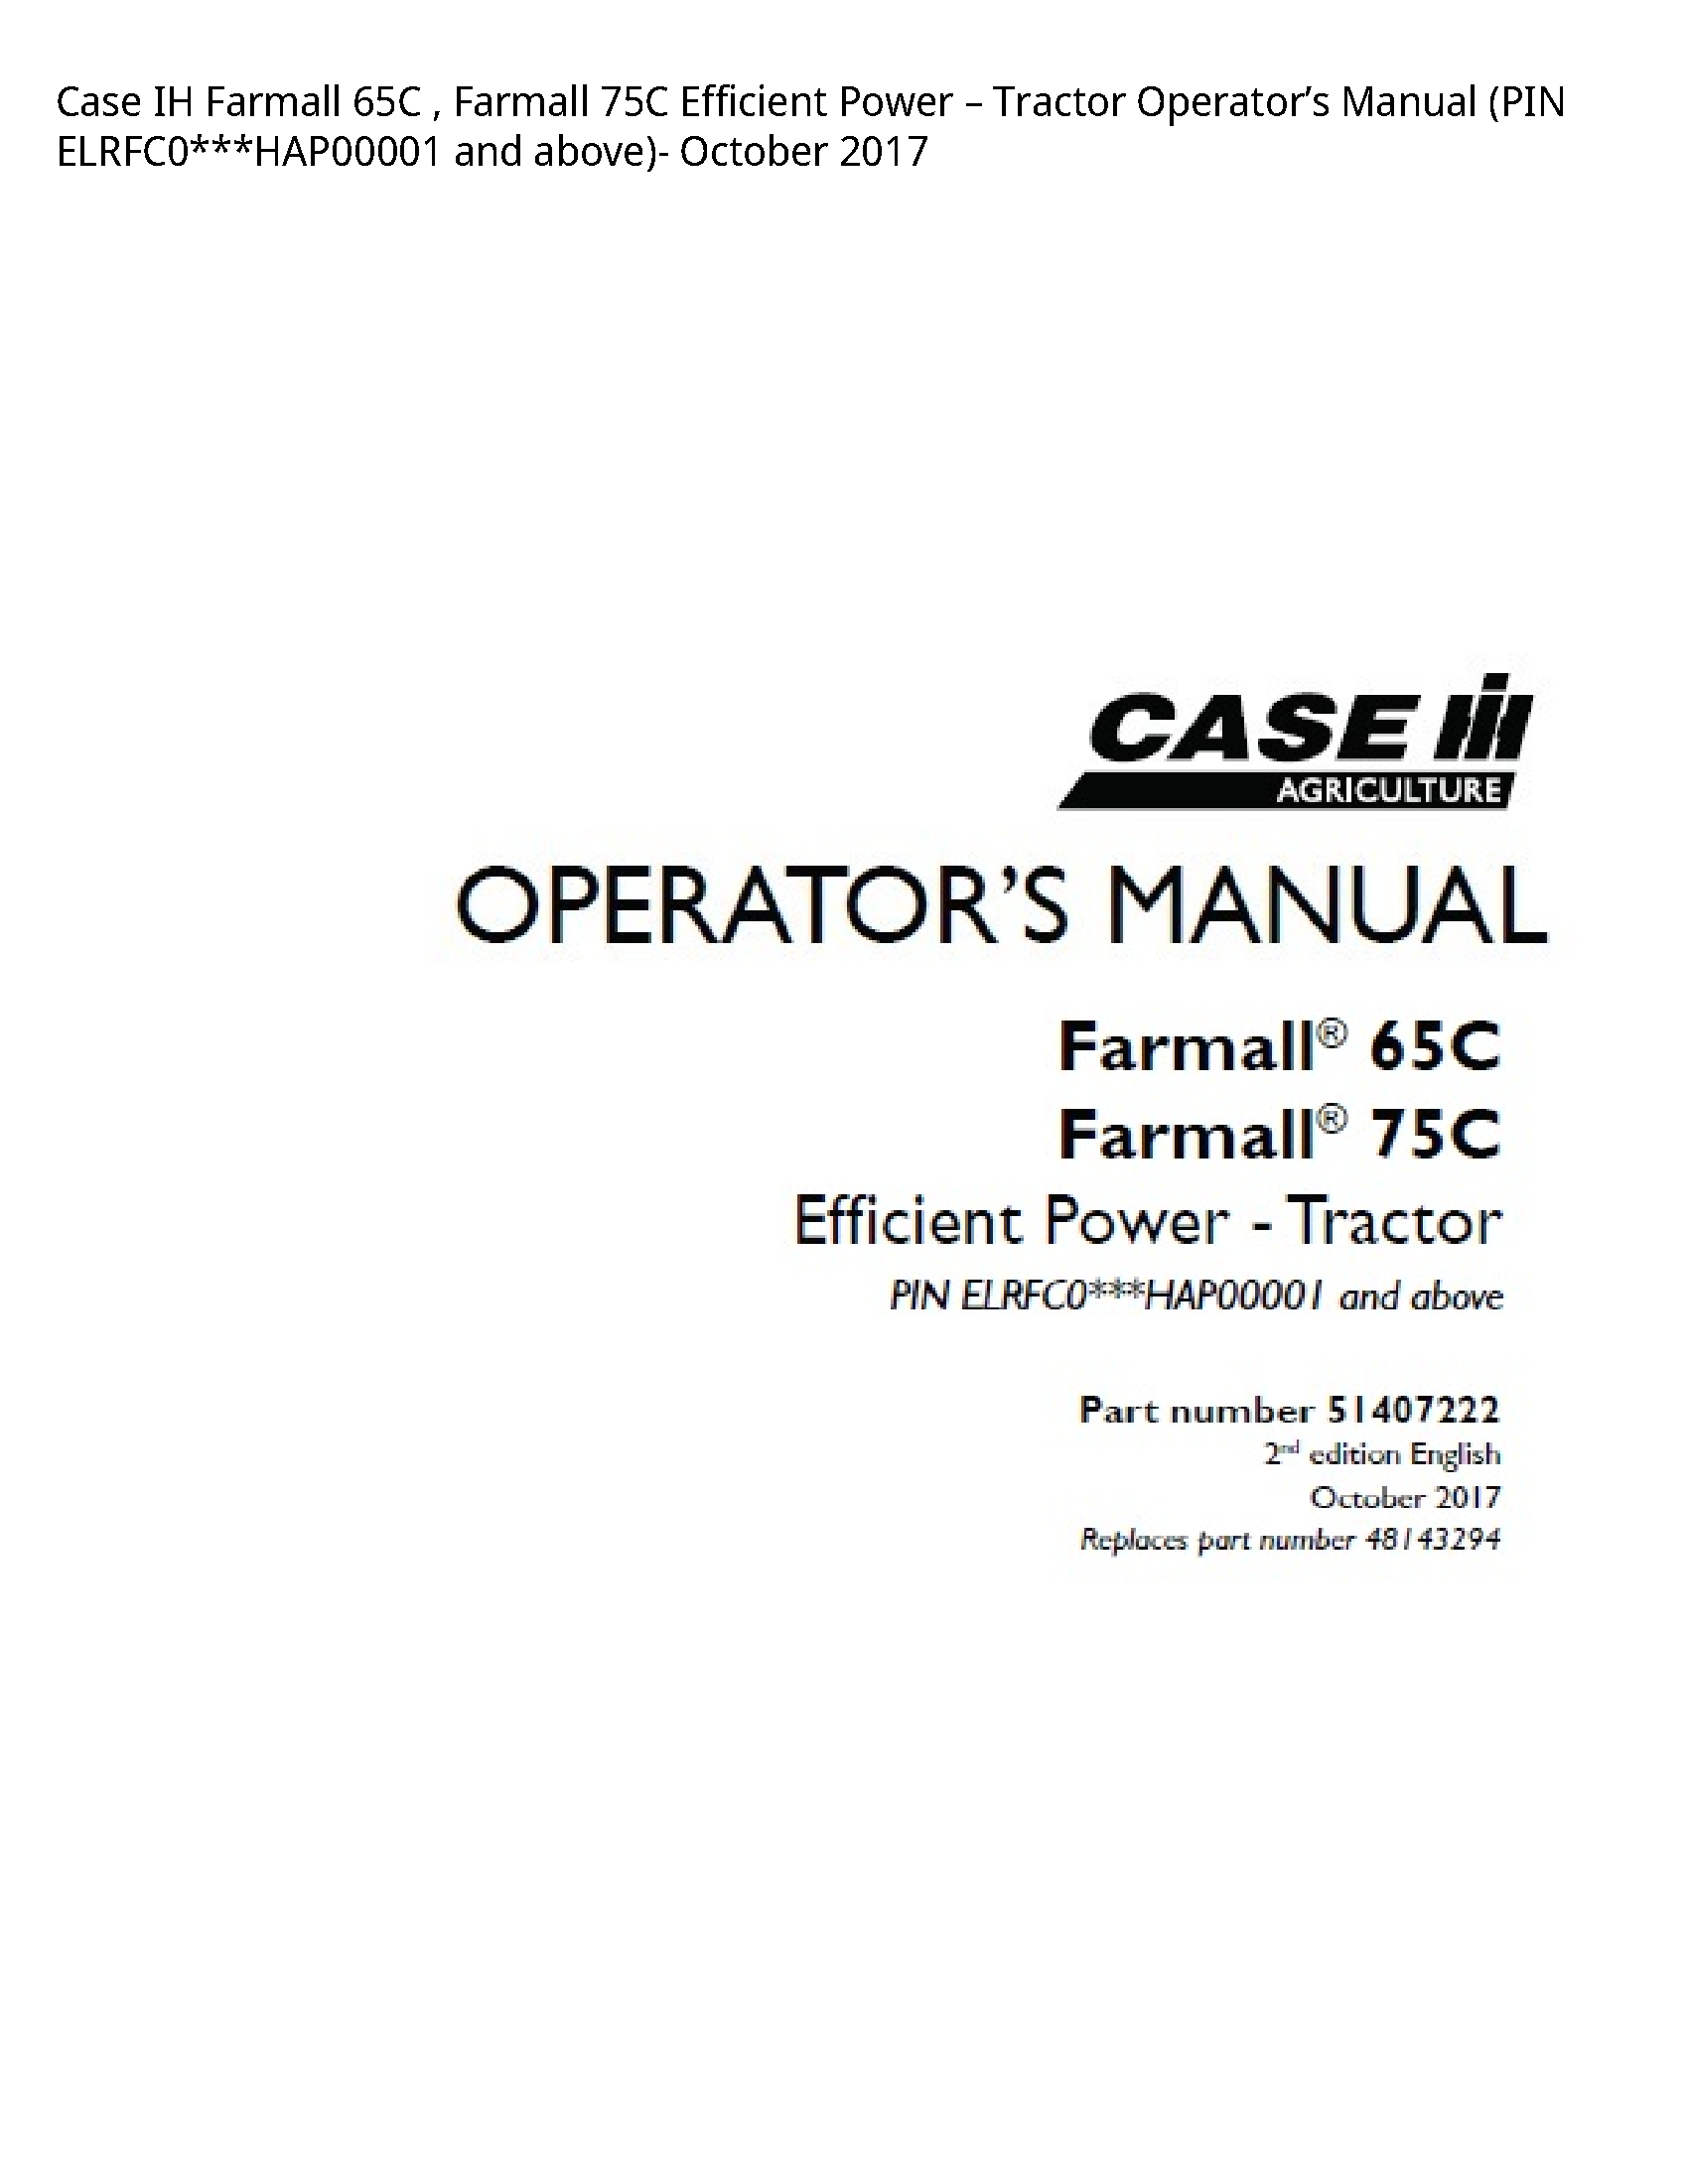 Case/Case IH 65C IH Farmall Farmall Efficient Power Tractor Operator’s manual